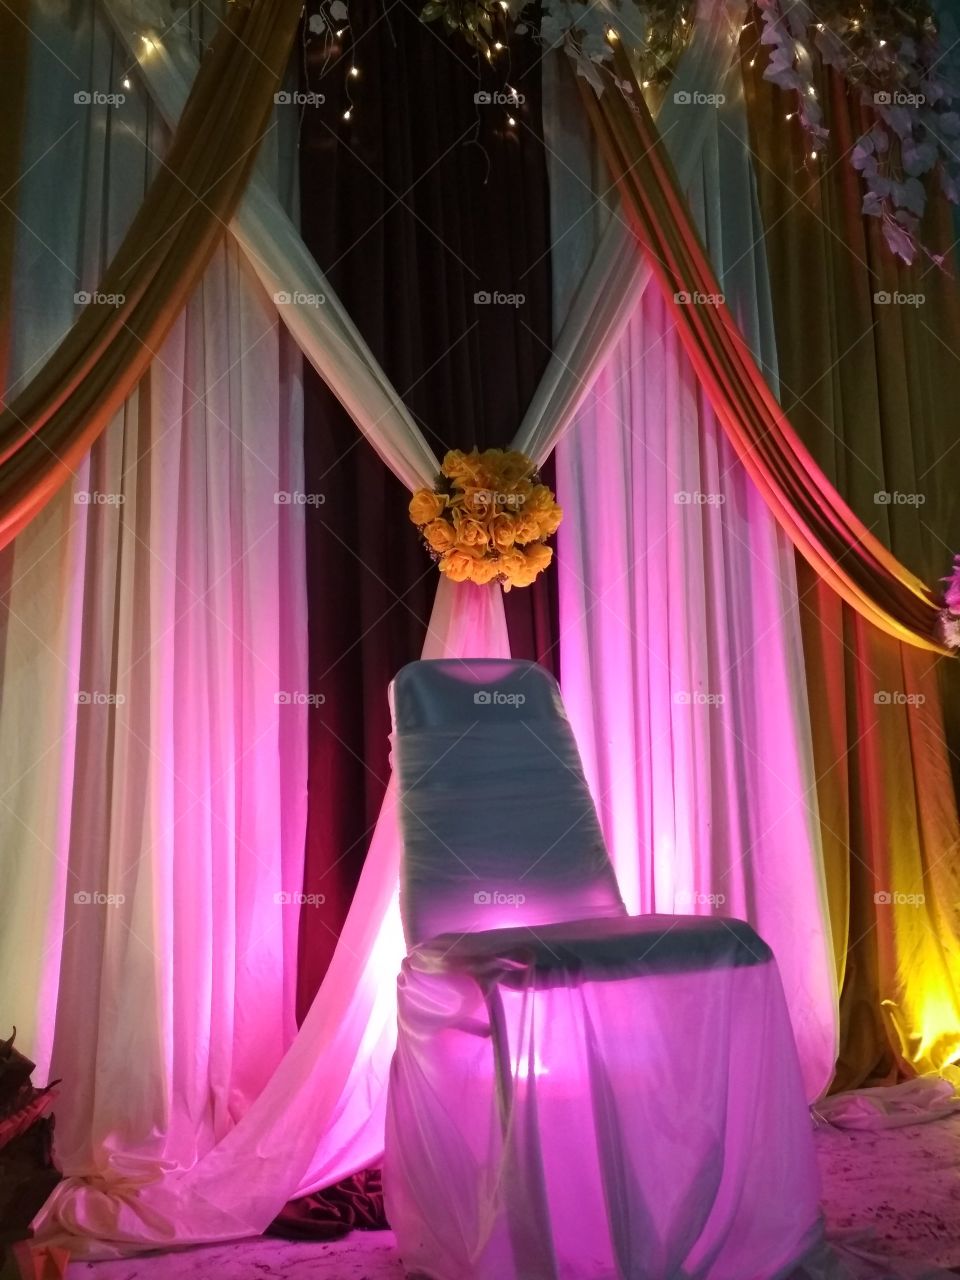 Pinky lighting on the chair